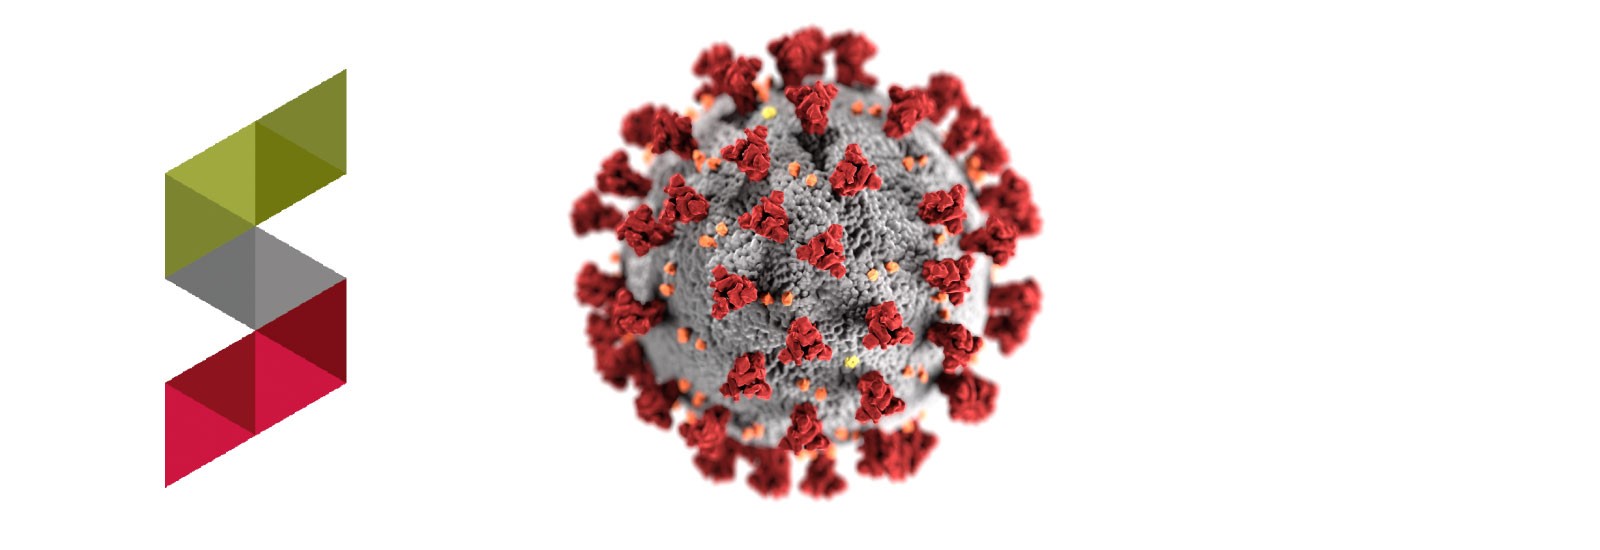 The Sustainability S logo next to an image of the coronavirus 